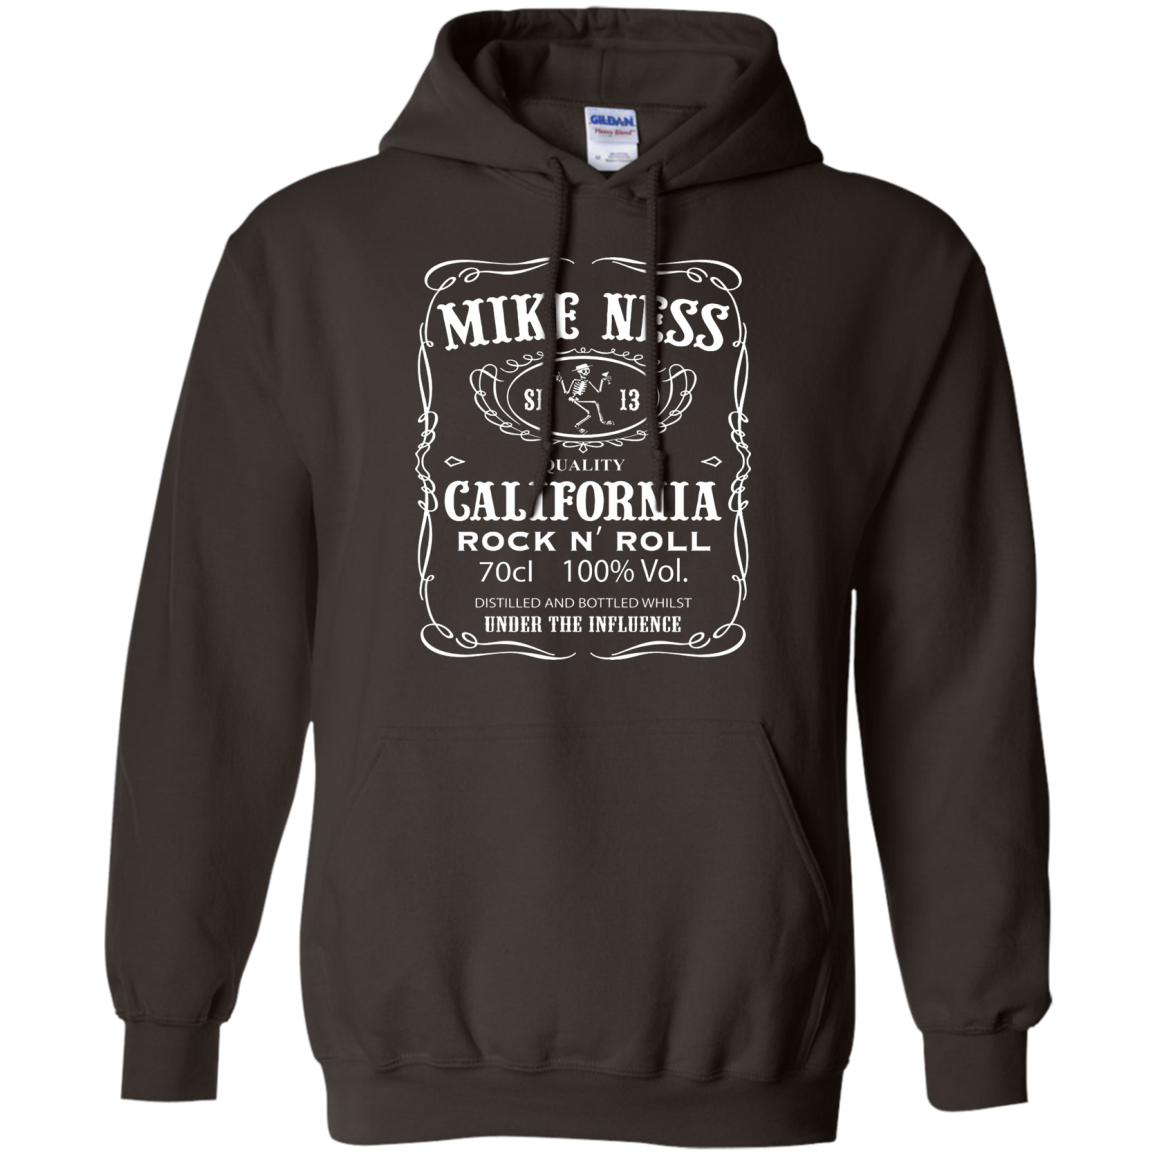 Mike Ness SD 13. Quality Galifornia Rock N' Roll T-shirt